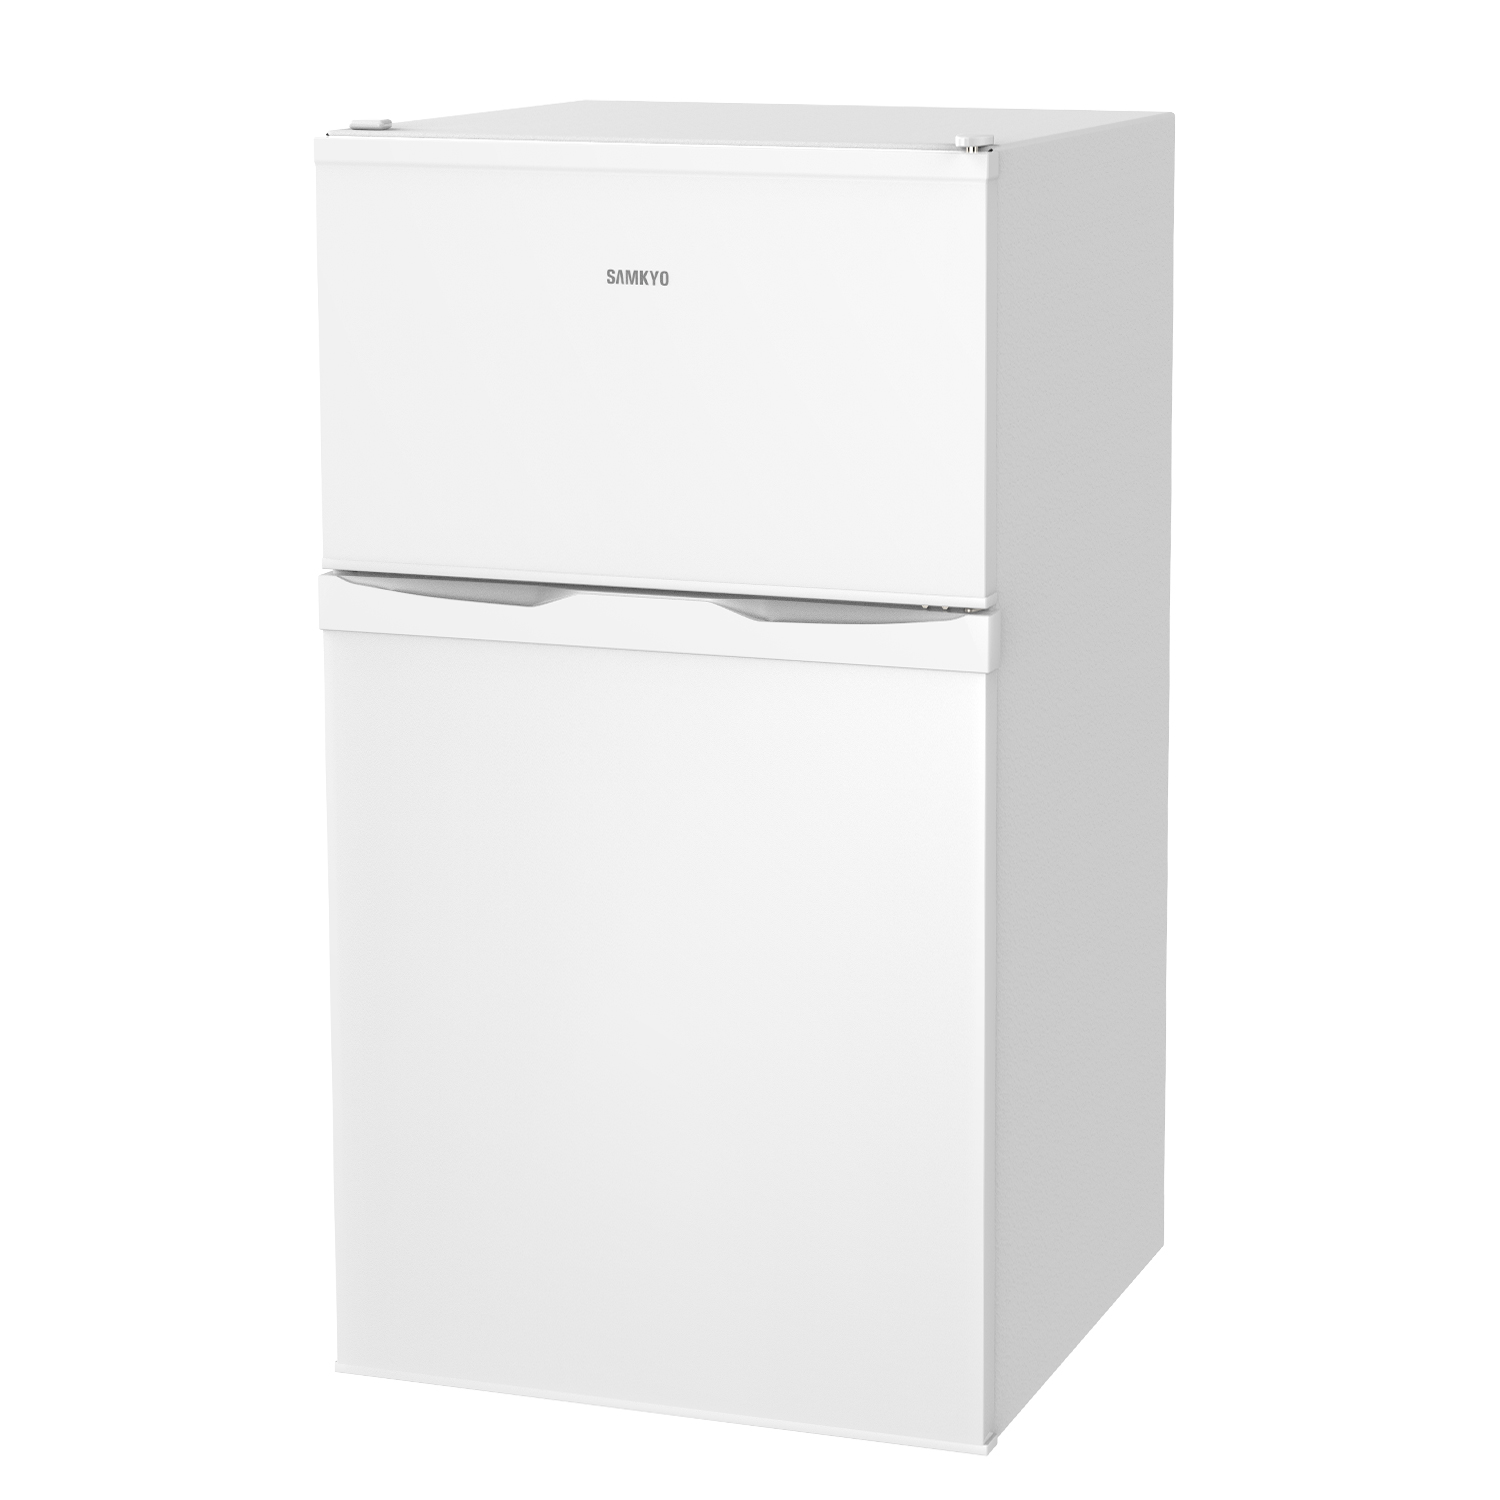 SAMKYO 冷蔵庫 95L 小型 2ドア 耐熱天板 コンパクト 左右開き対応 一人暮らし 静音 ホワイト GU90